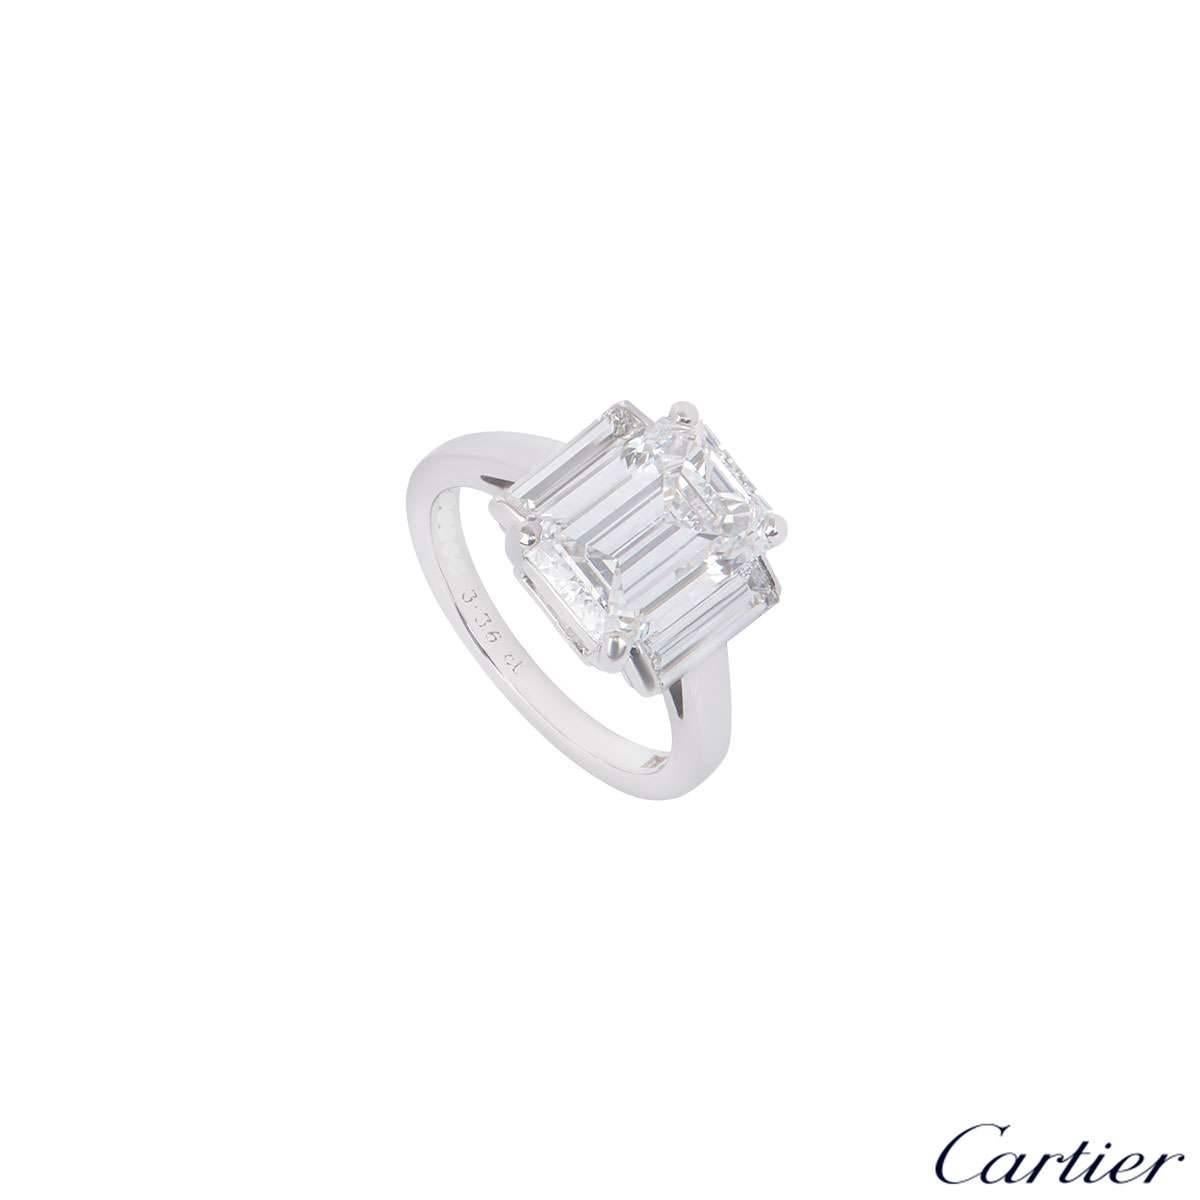 7 carat cartier ring